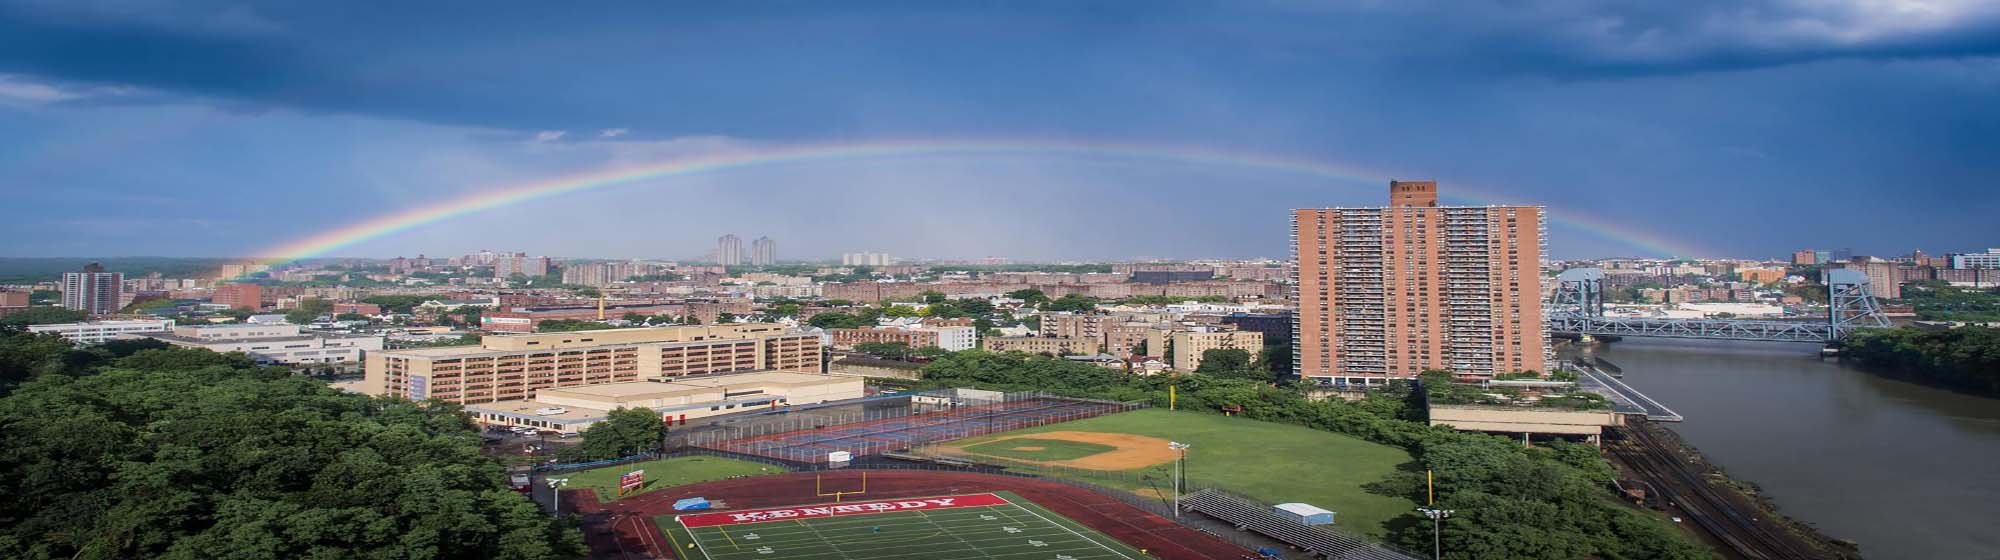 Bronx skyline with rainbow over athletic fields